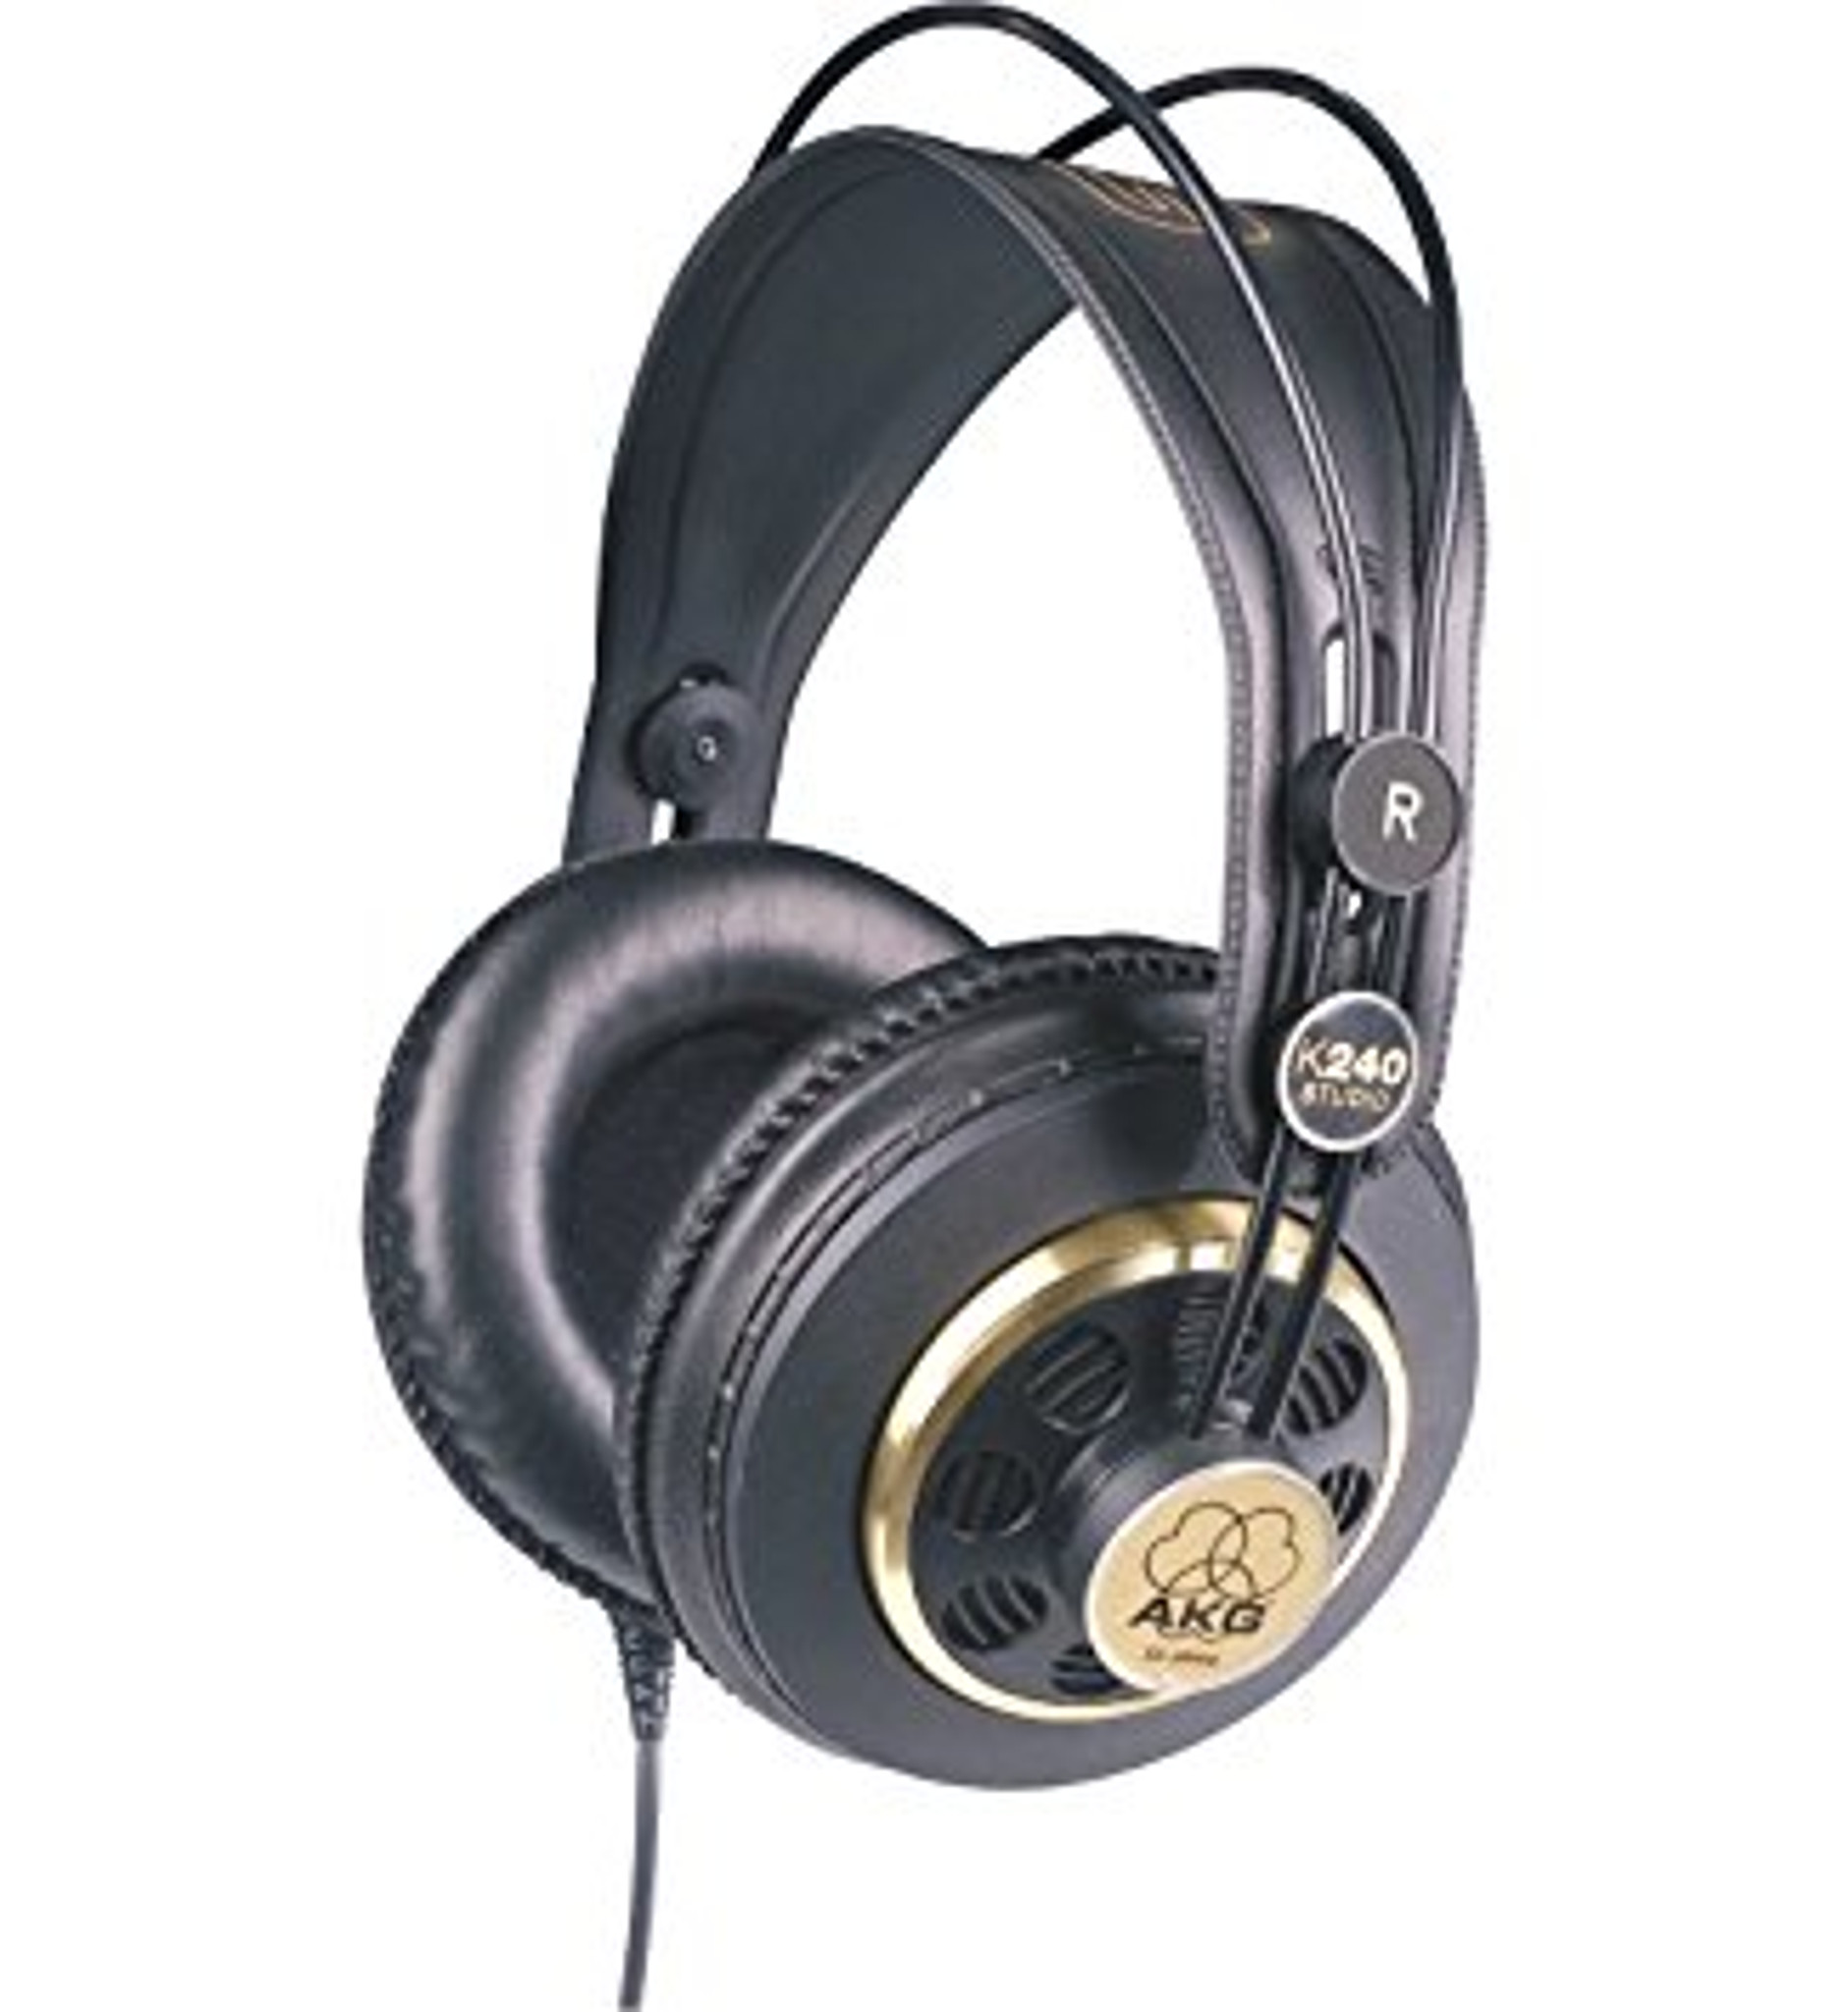 AKG K240 Studio Headphones - Austria Made 55ohms (For Parts)